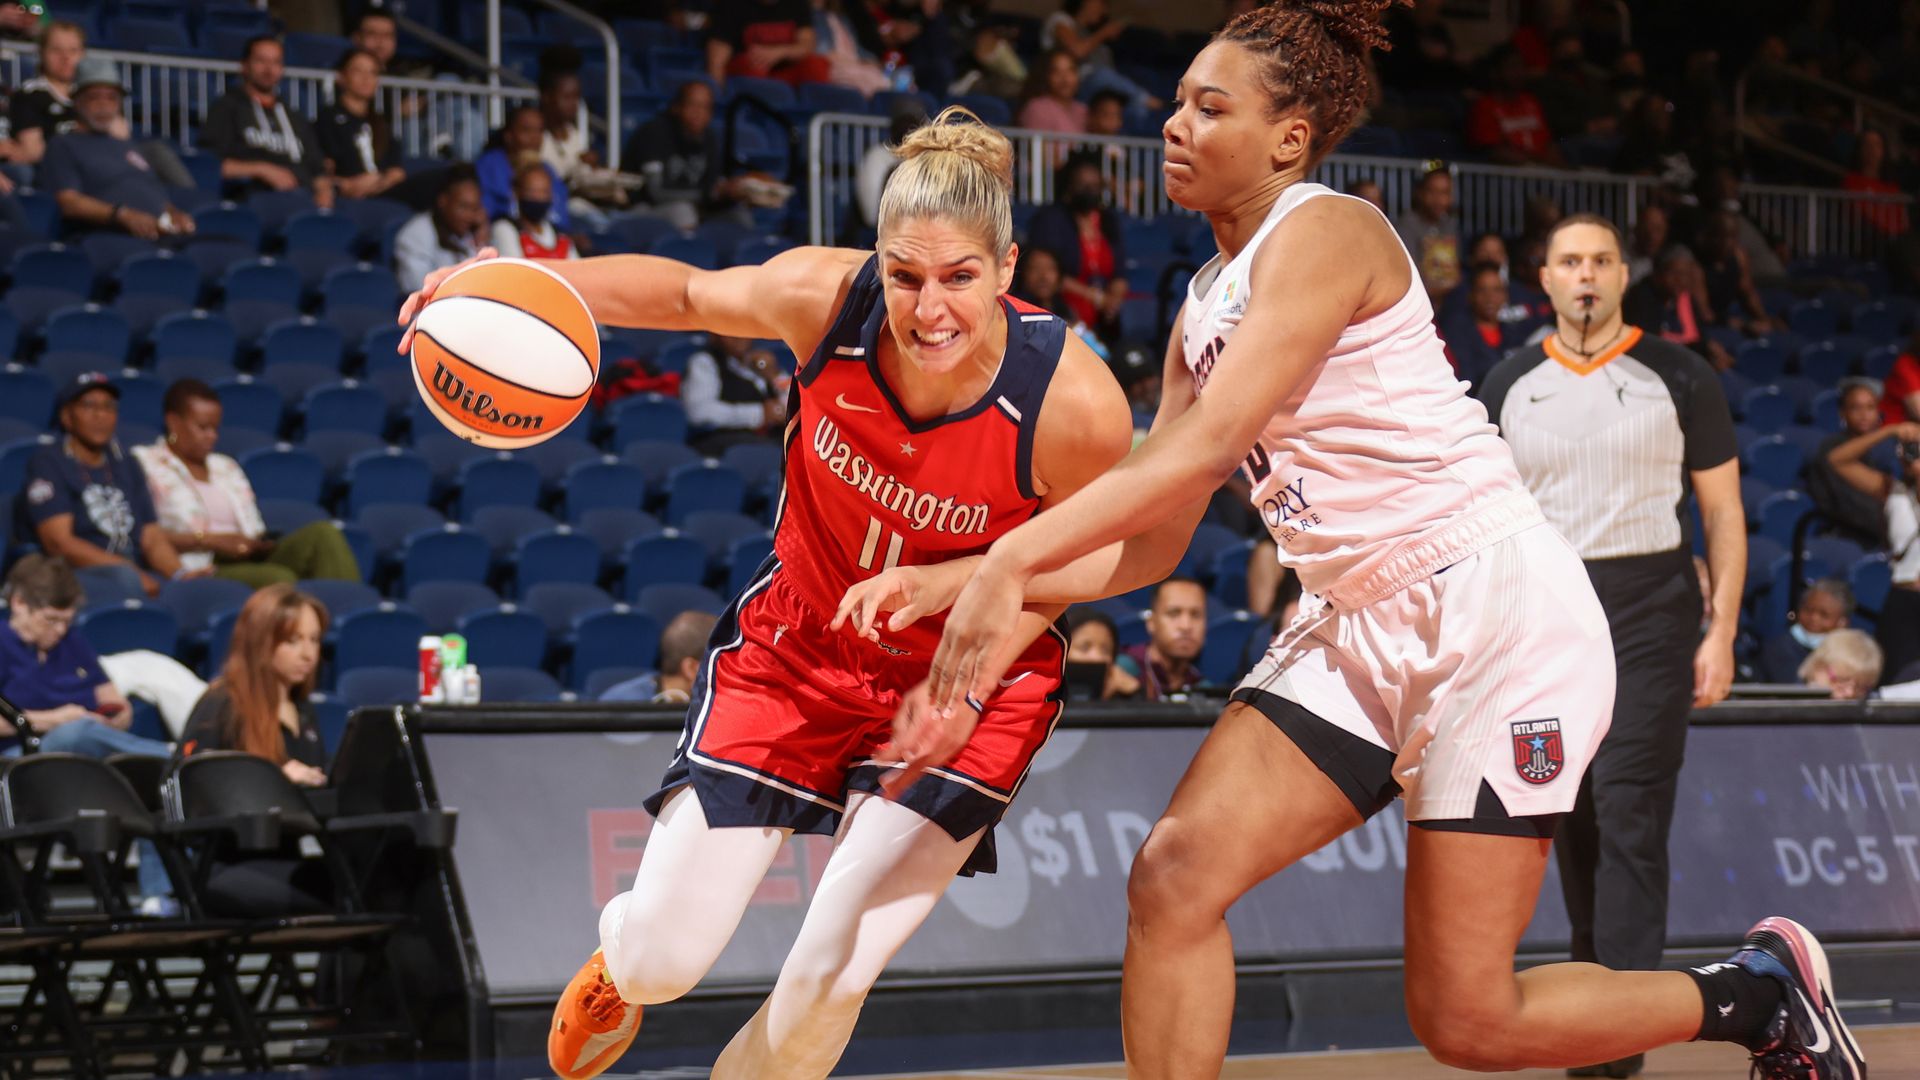 Elena Delle Donne dribbles a basketball past a defender.